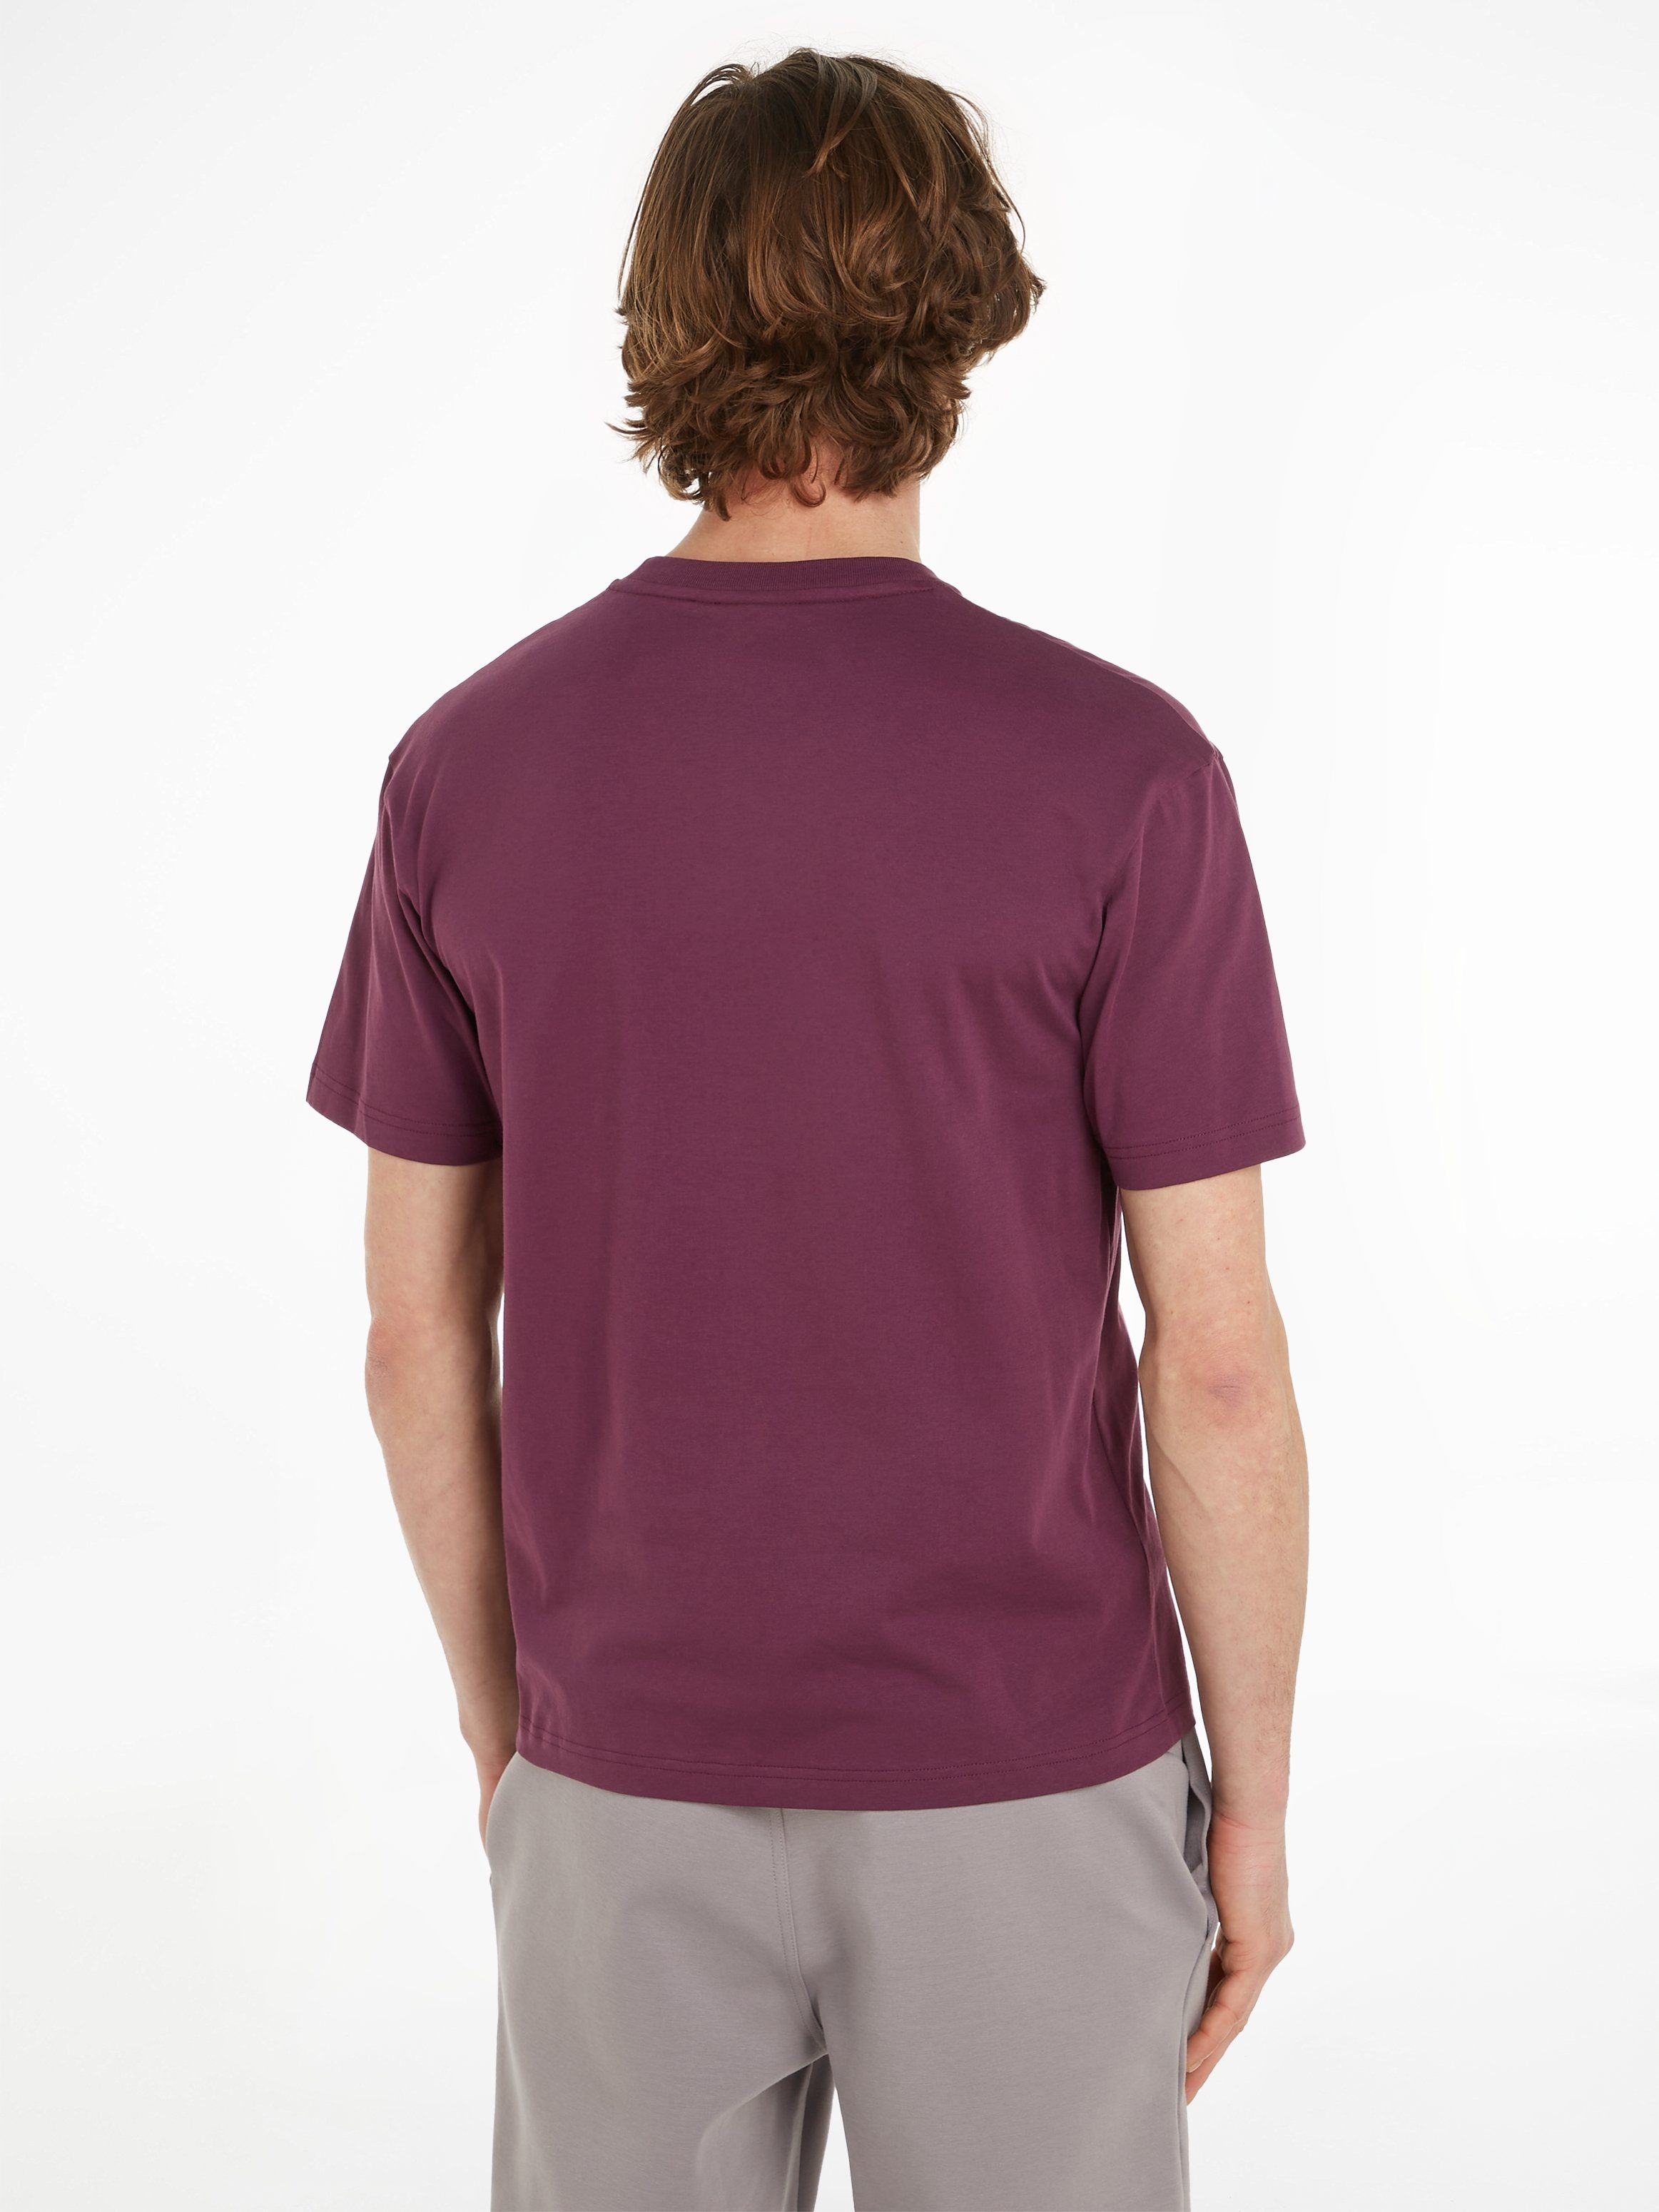 Calvin Klein aufgedrucktem HERO Plum Italian Markenlabel T-Shirt COMFORT T-SHIRT LOGO mit